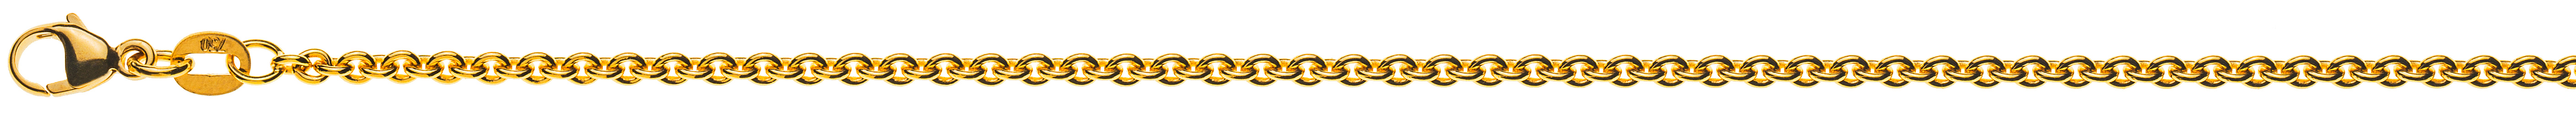 AURONOS Prestige Necklace Yellow Gold 18K Round Anchor 42cm 2.3mm